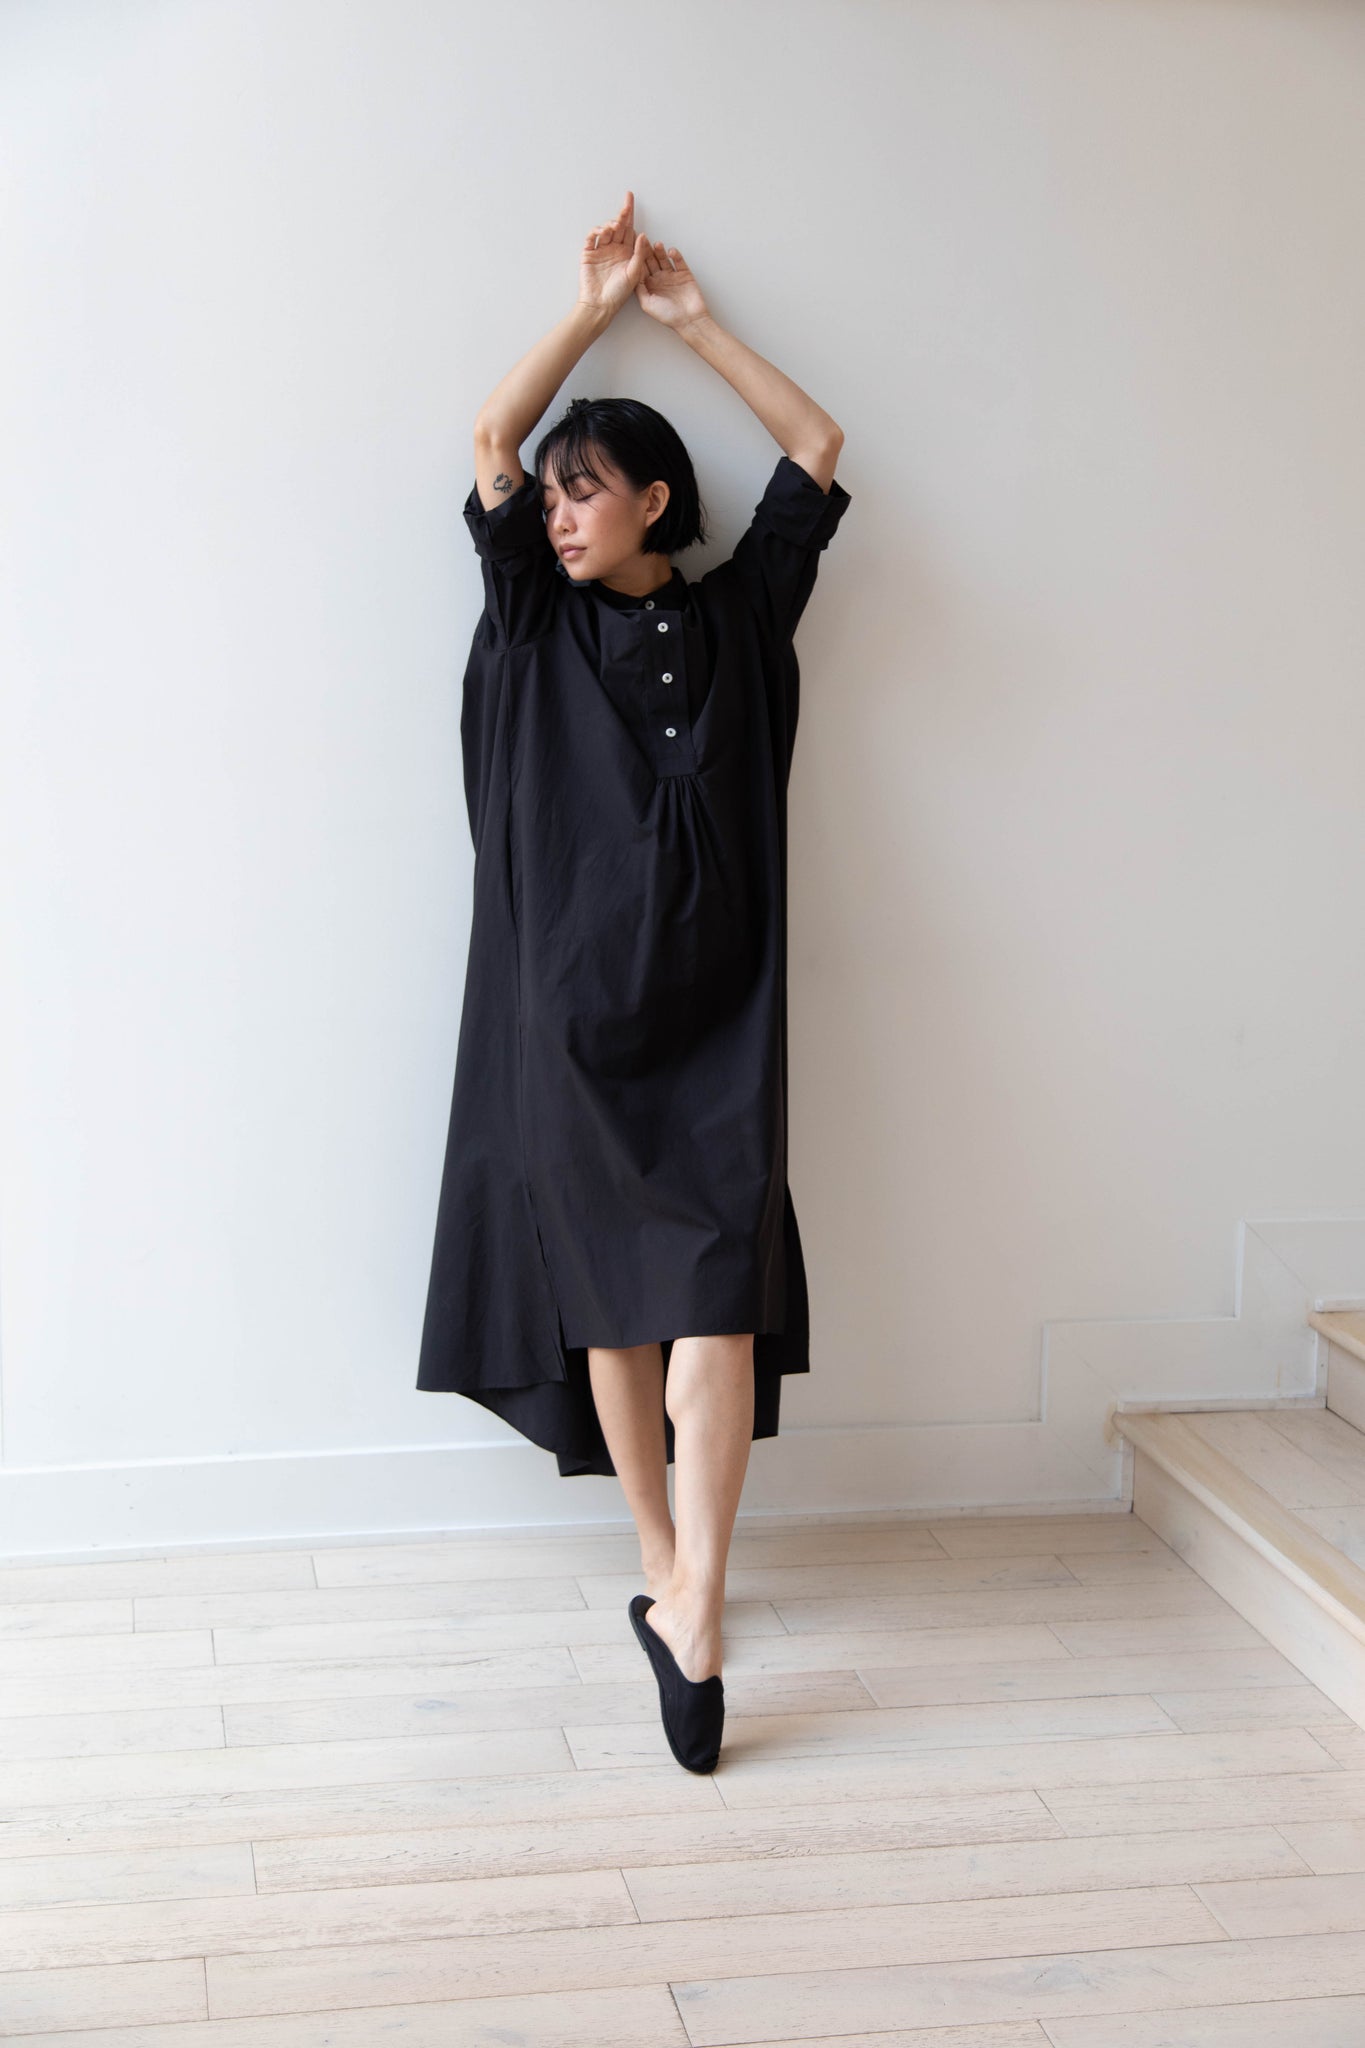 Fabiana Pigna Gogol Dress in Black